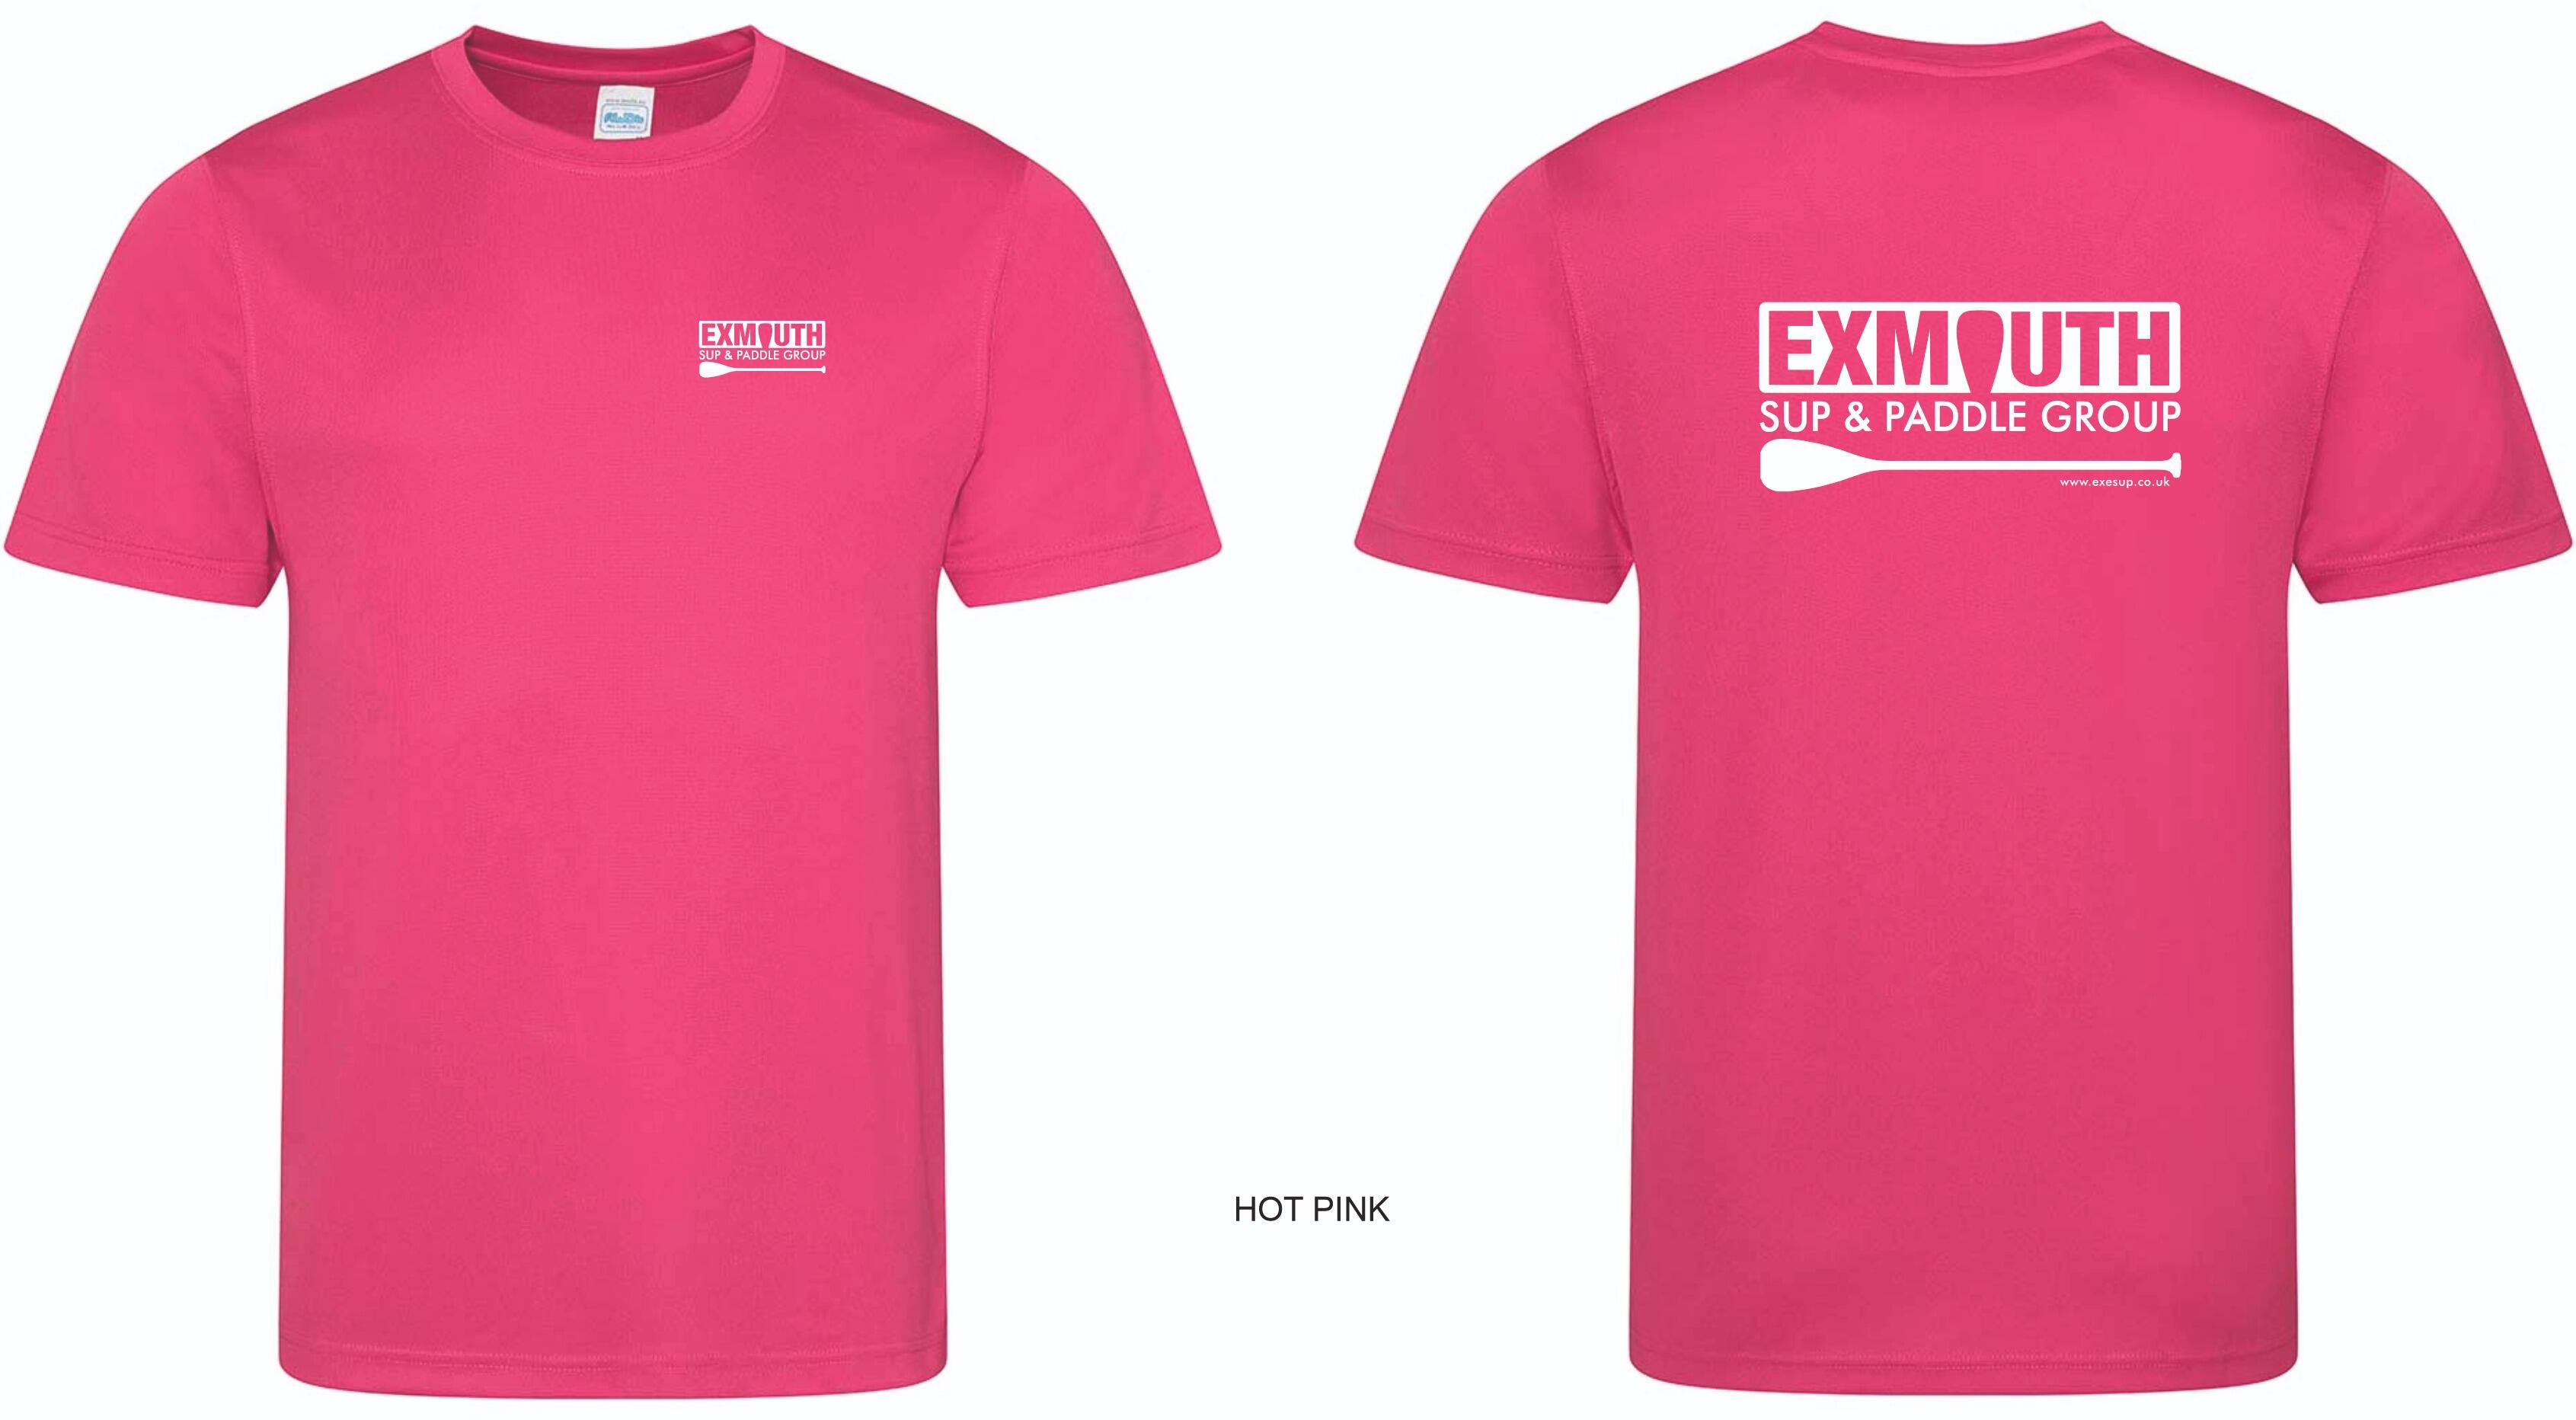 exmouth sup t shirt hot pink